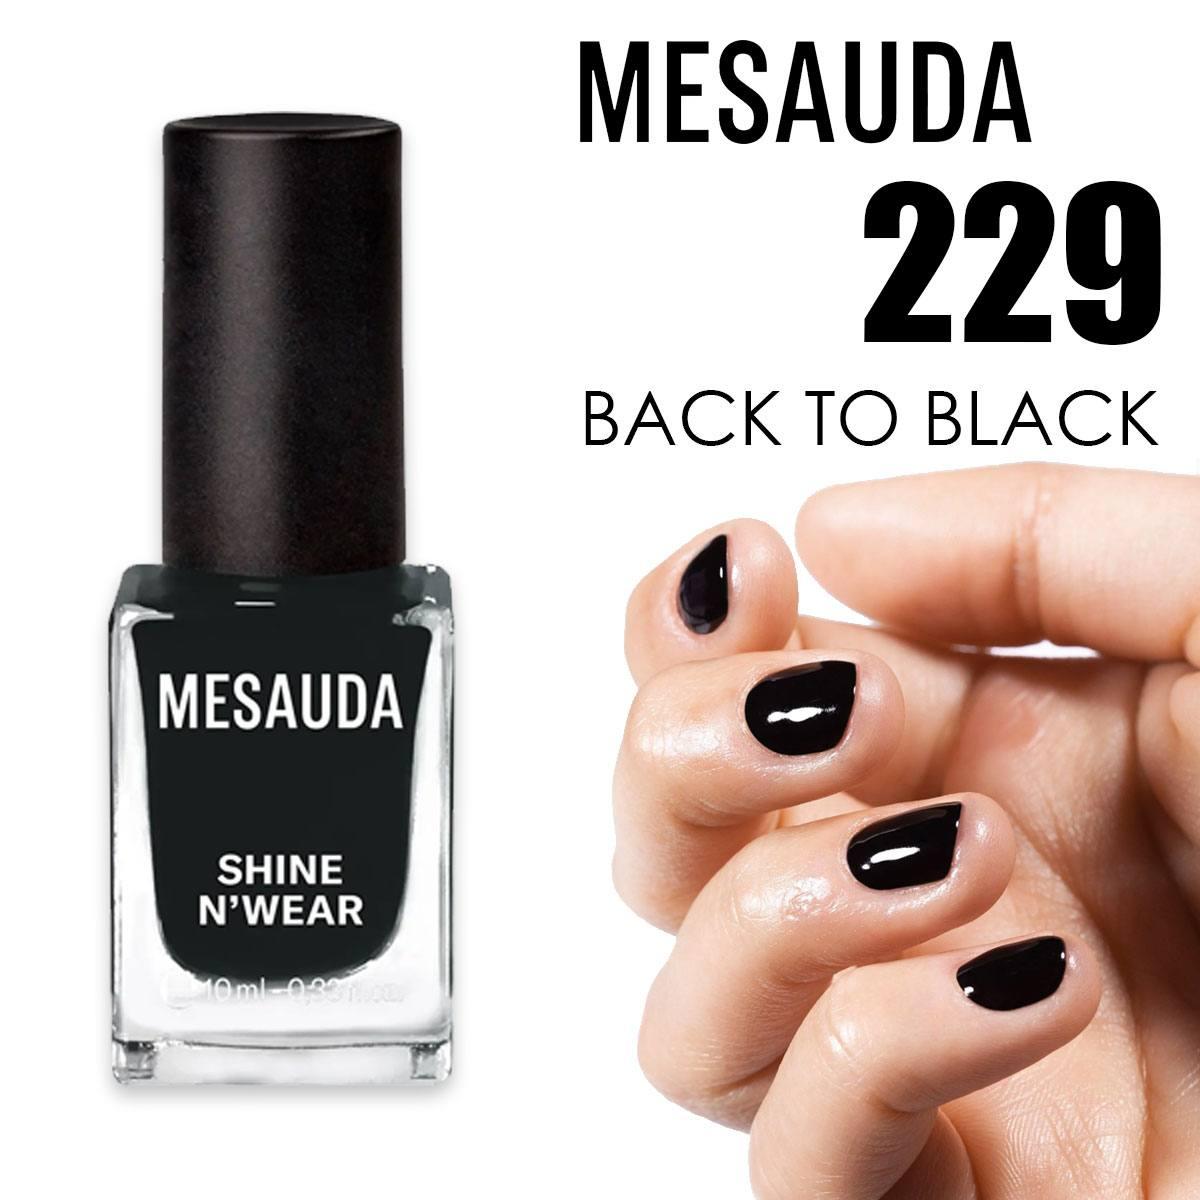 MESAUDA SHINE N'WEAR FULL 229 Back to Black